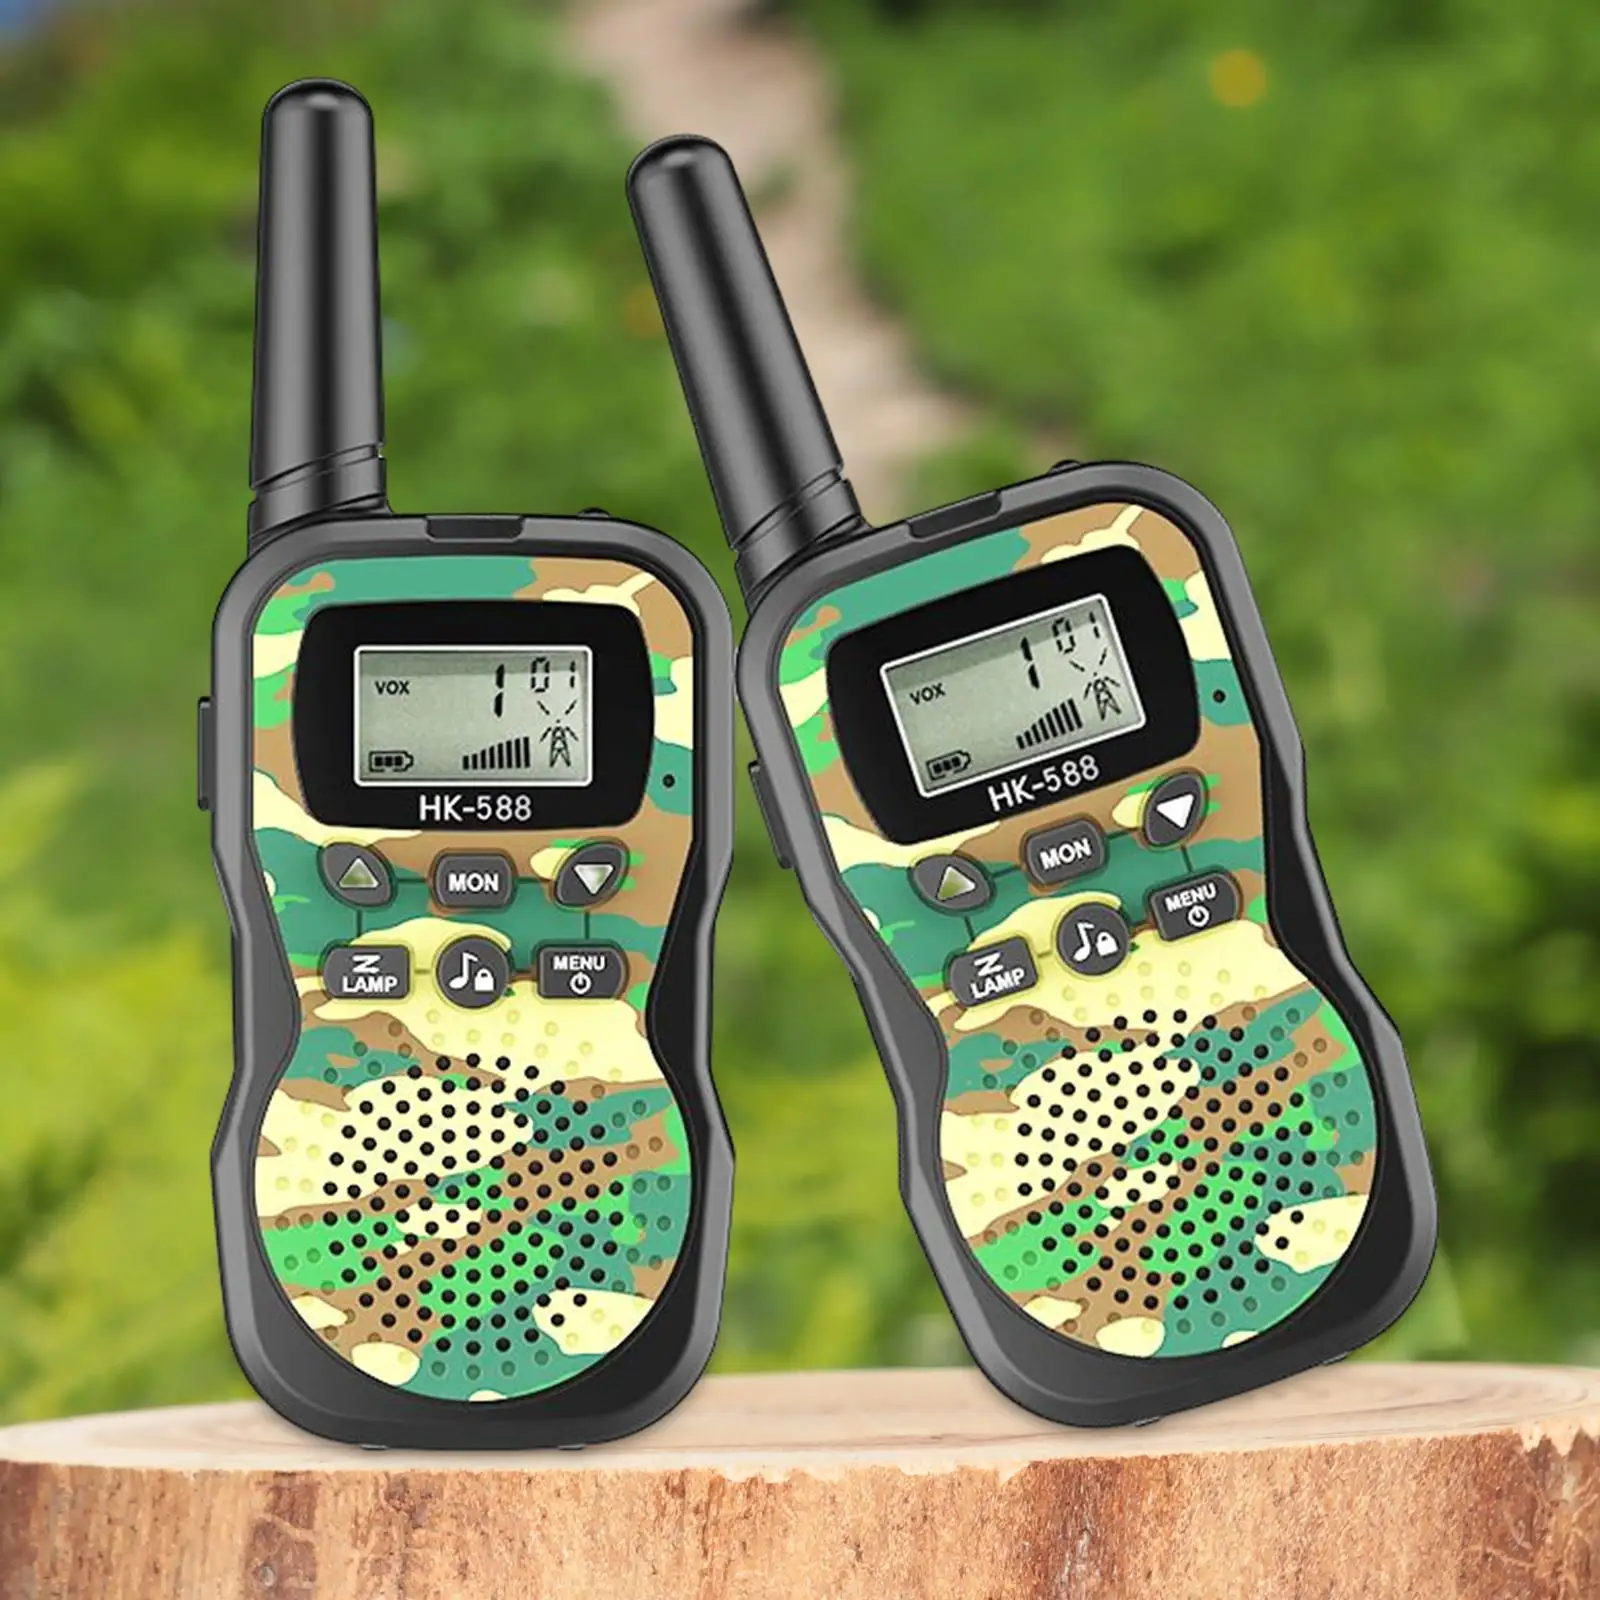 Outdoor Kids Walkie Talkies Toy Two Way Radios Good Performance Long Range